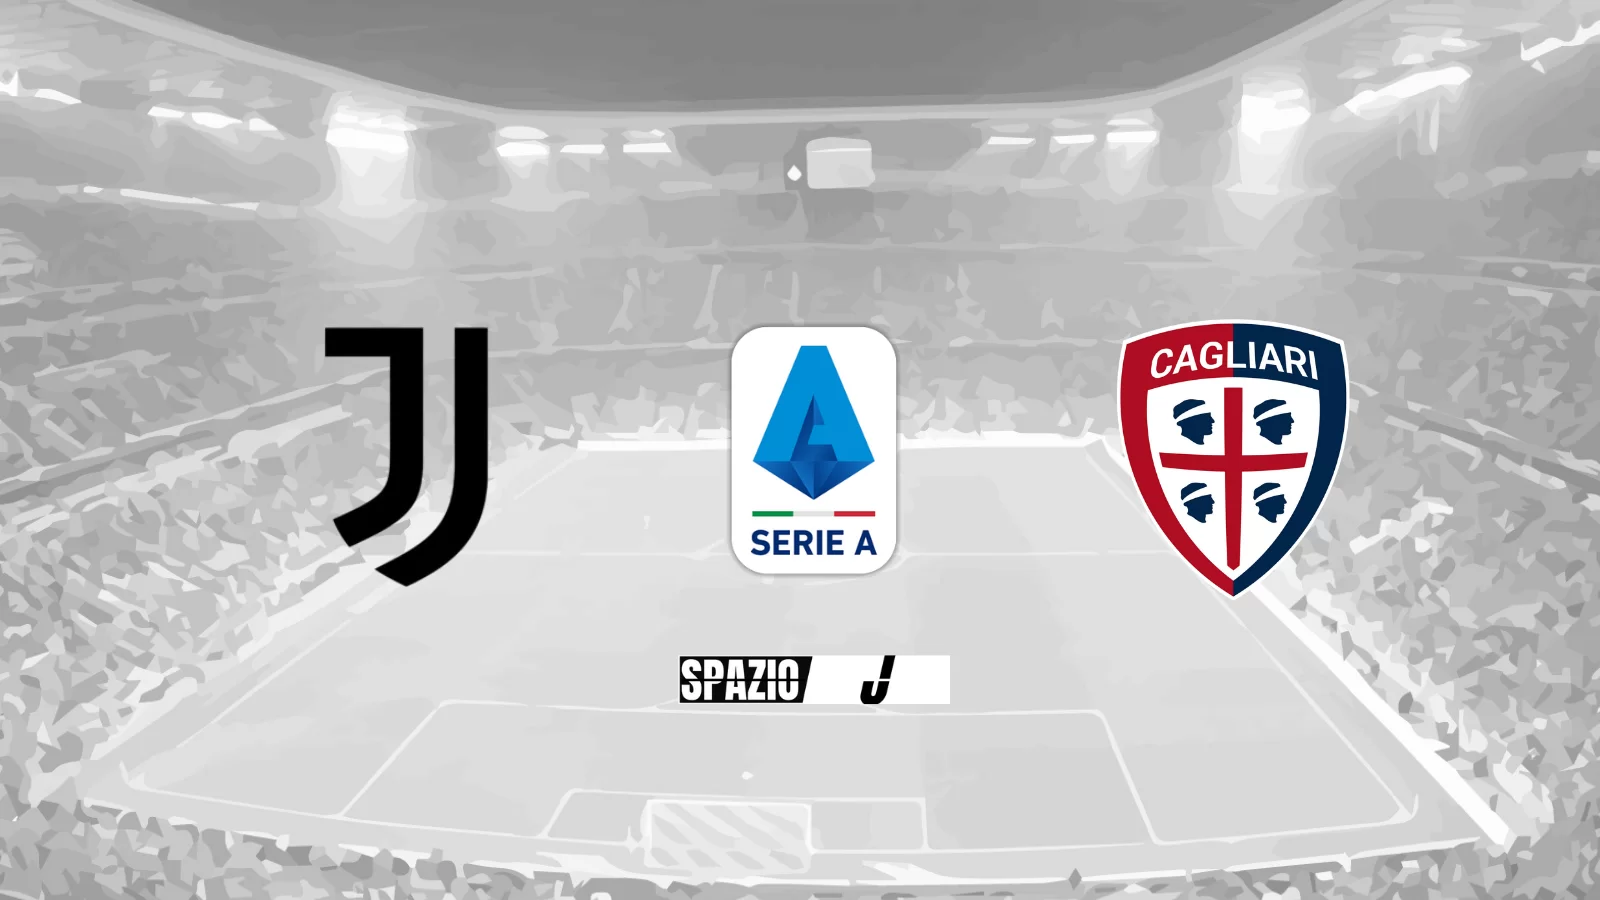 Verso Juventus-Cagliari: De Ligt torna titolare, Dybala va in panchina